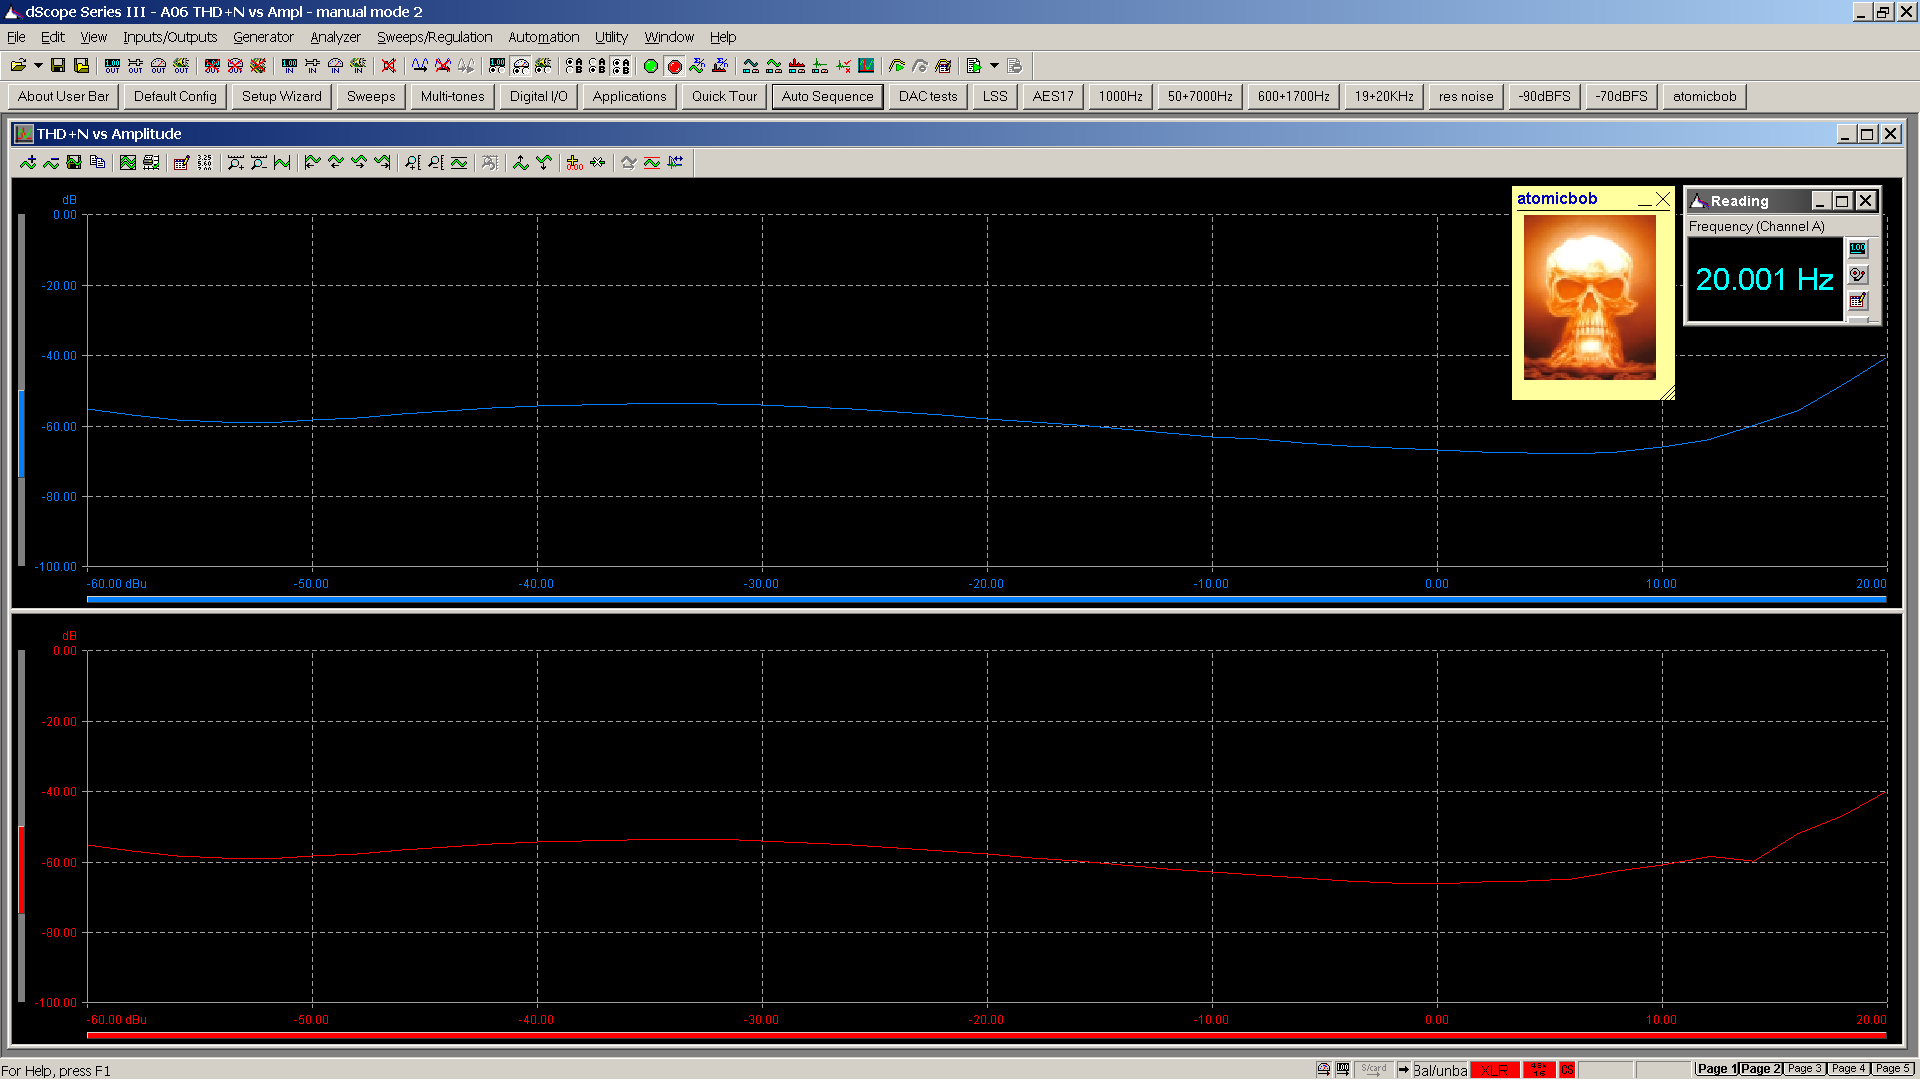 20181030 ISO Twin 20 Hz THD+N vs Amplitude 100K - v2.png